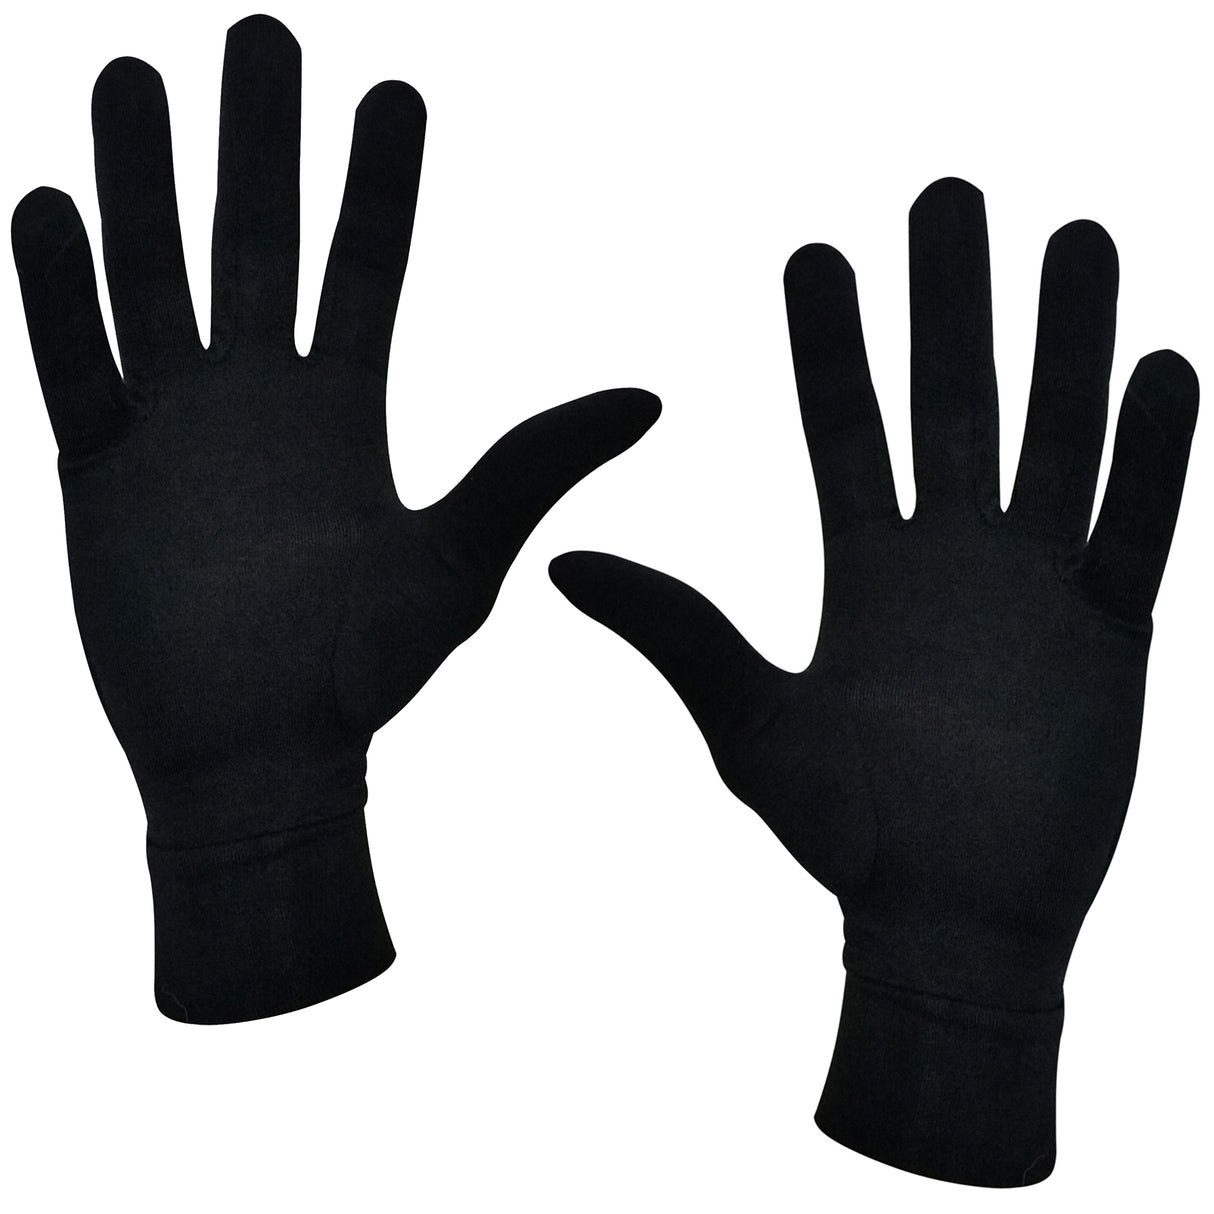 Soft Tec Thermal glove